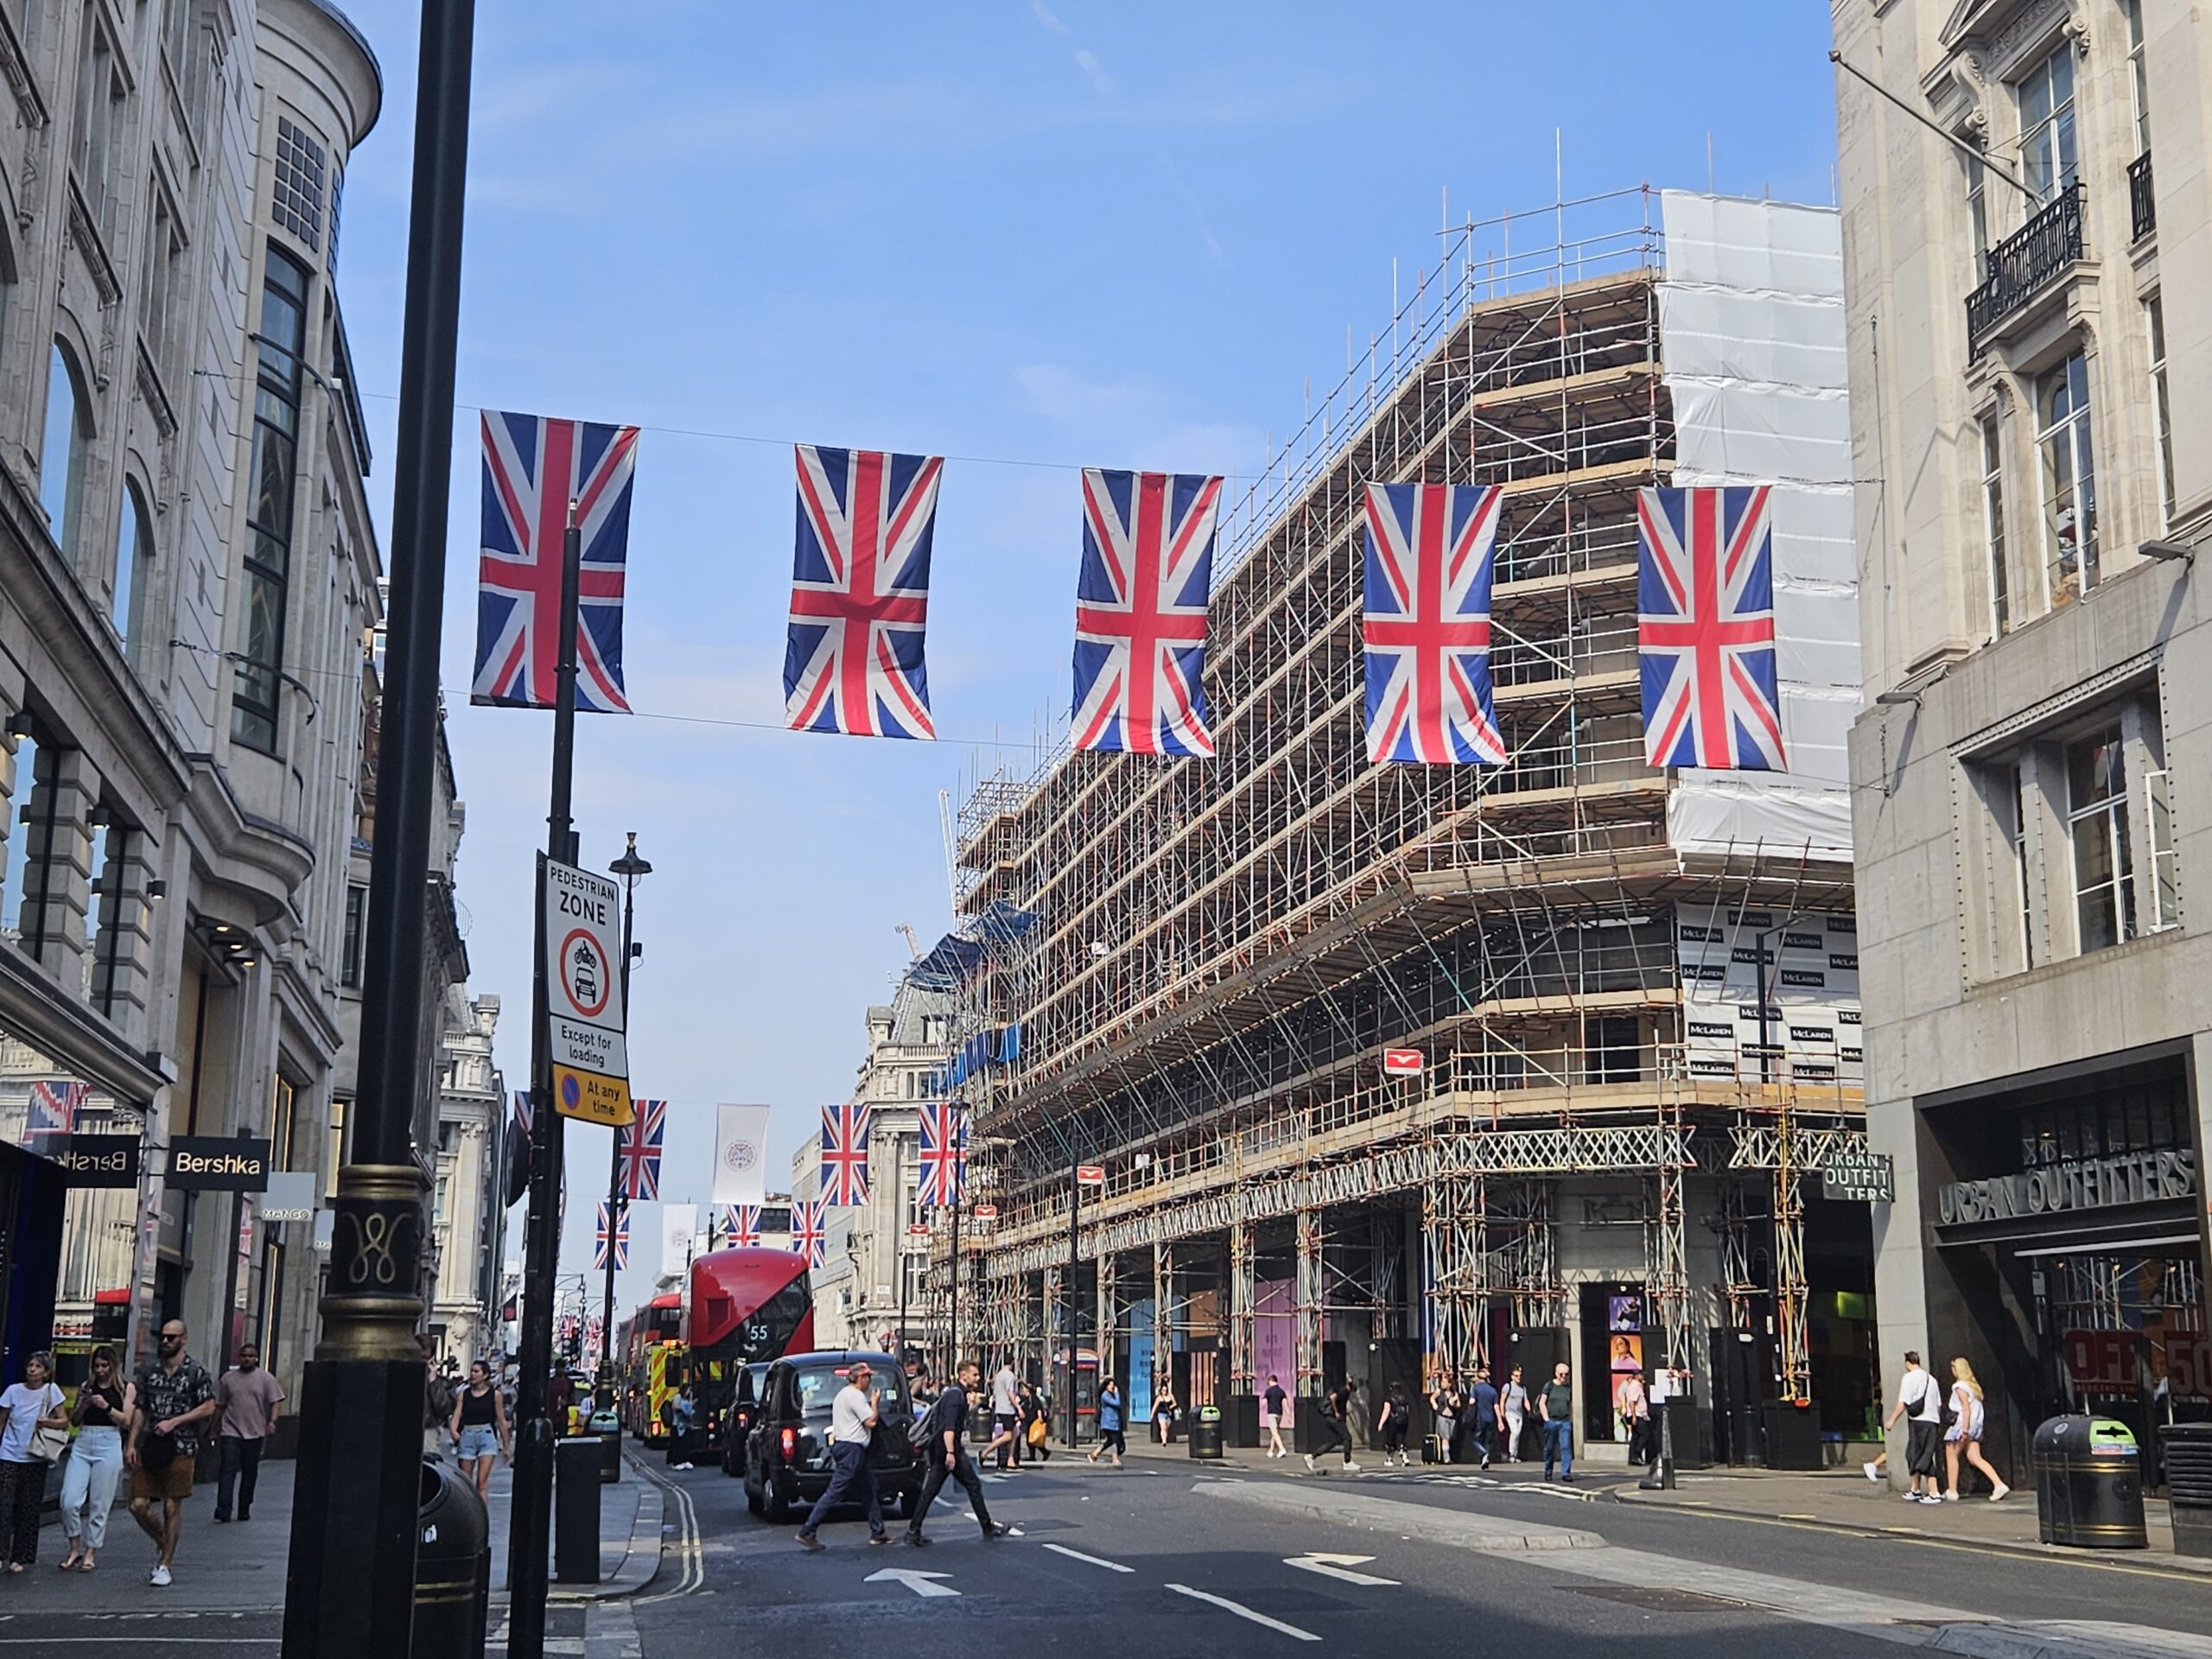 Union flags in a London street